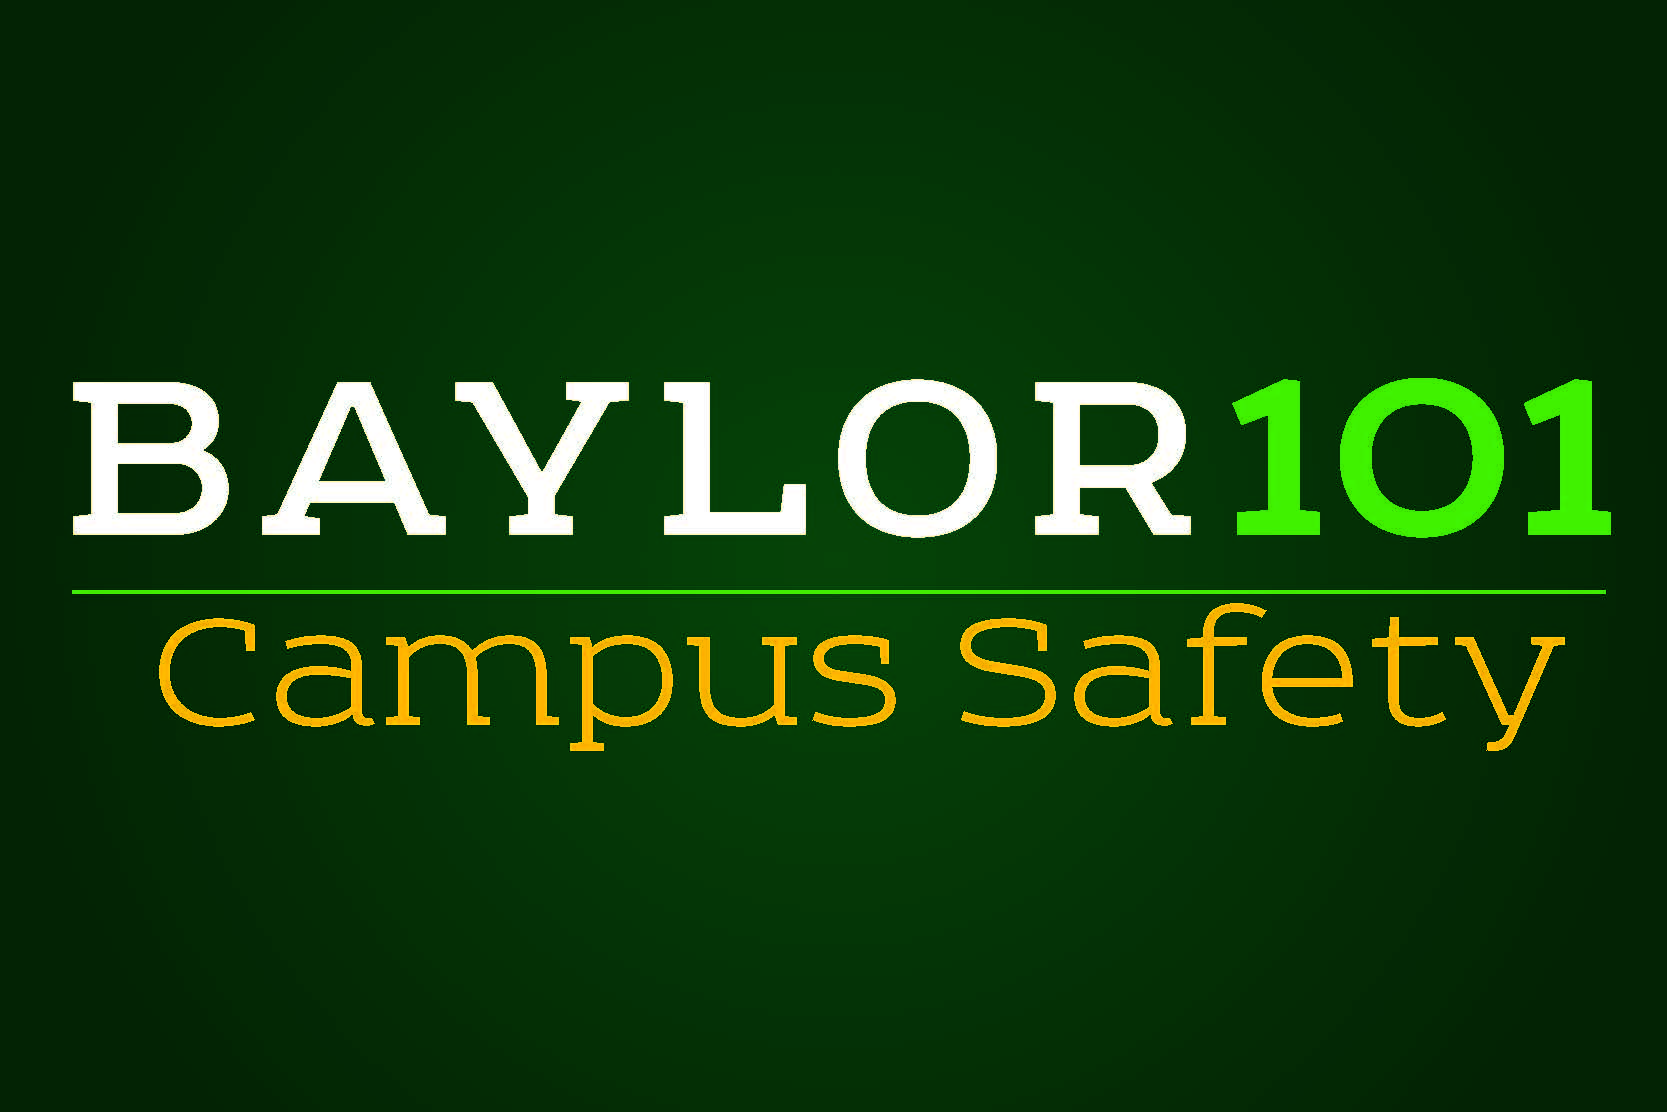 Baylor 101: Campus Safety